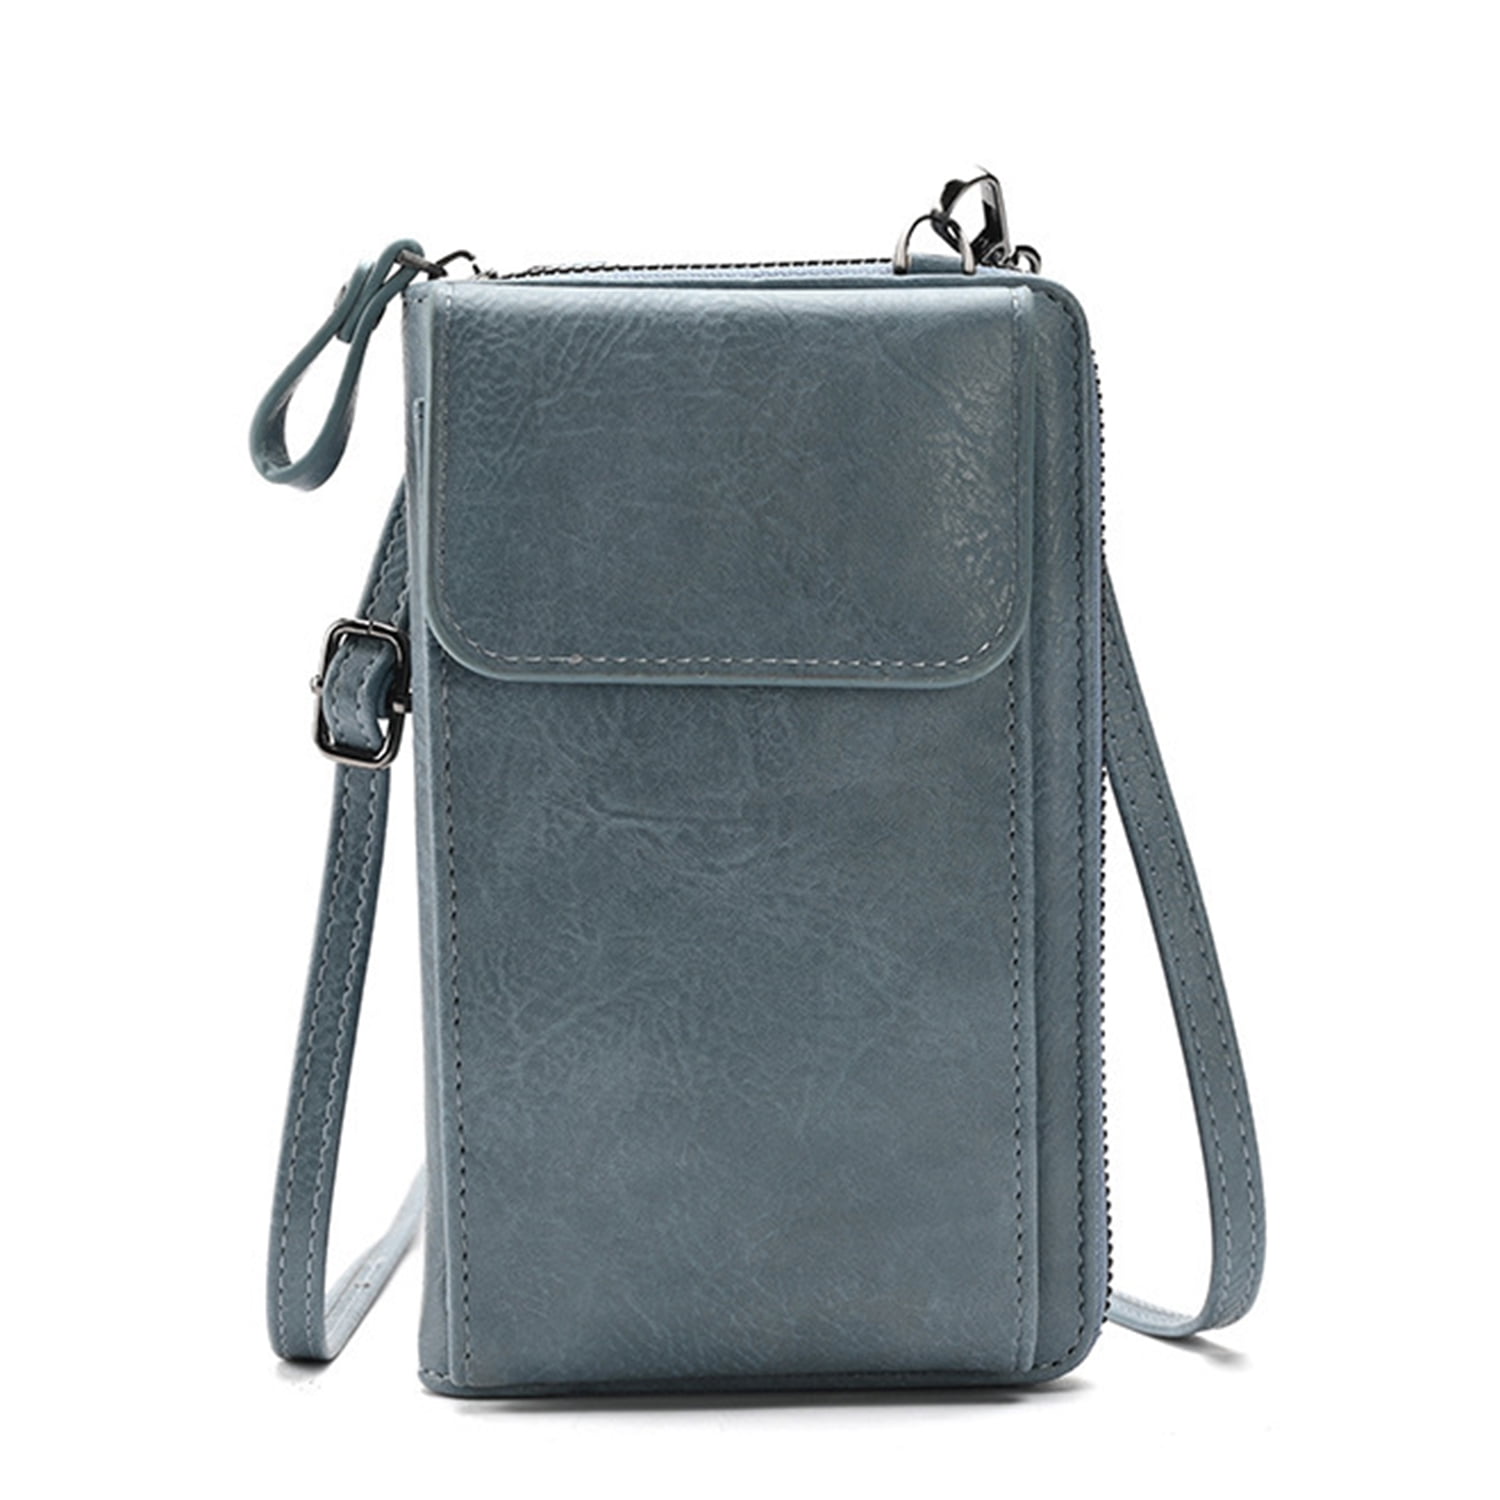 Cross Body Bag - Small Handbags & Shoulder Bags With Adjustable